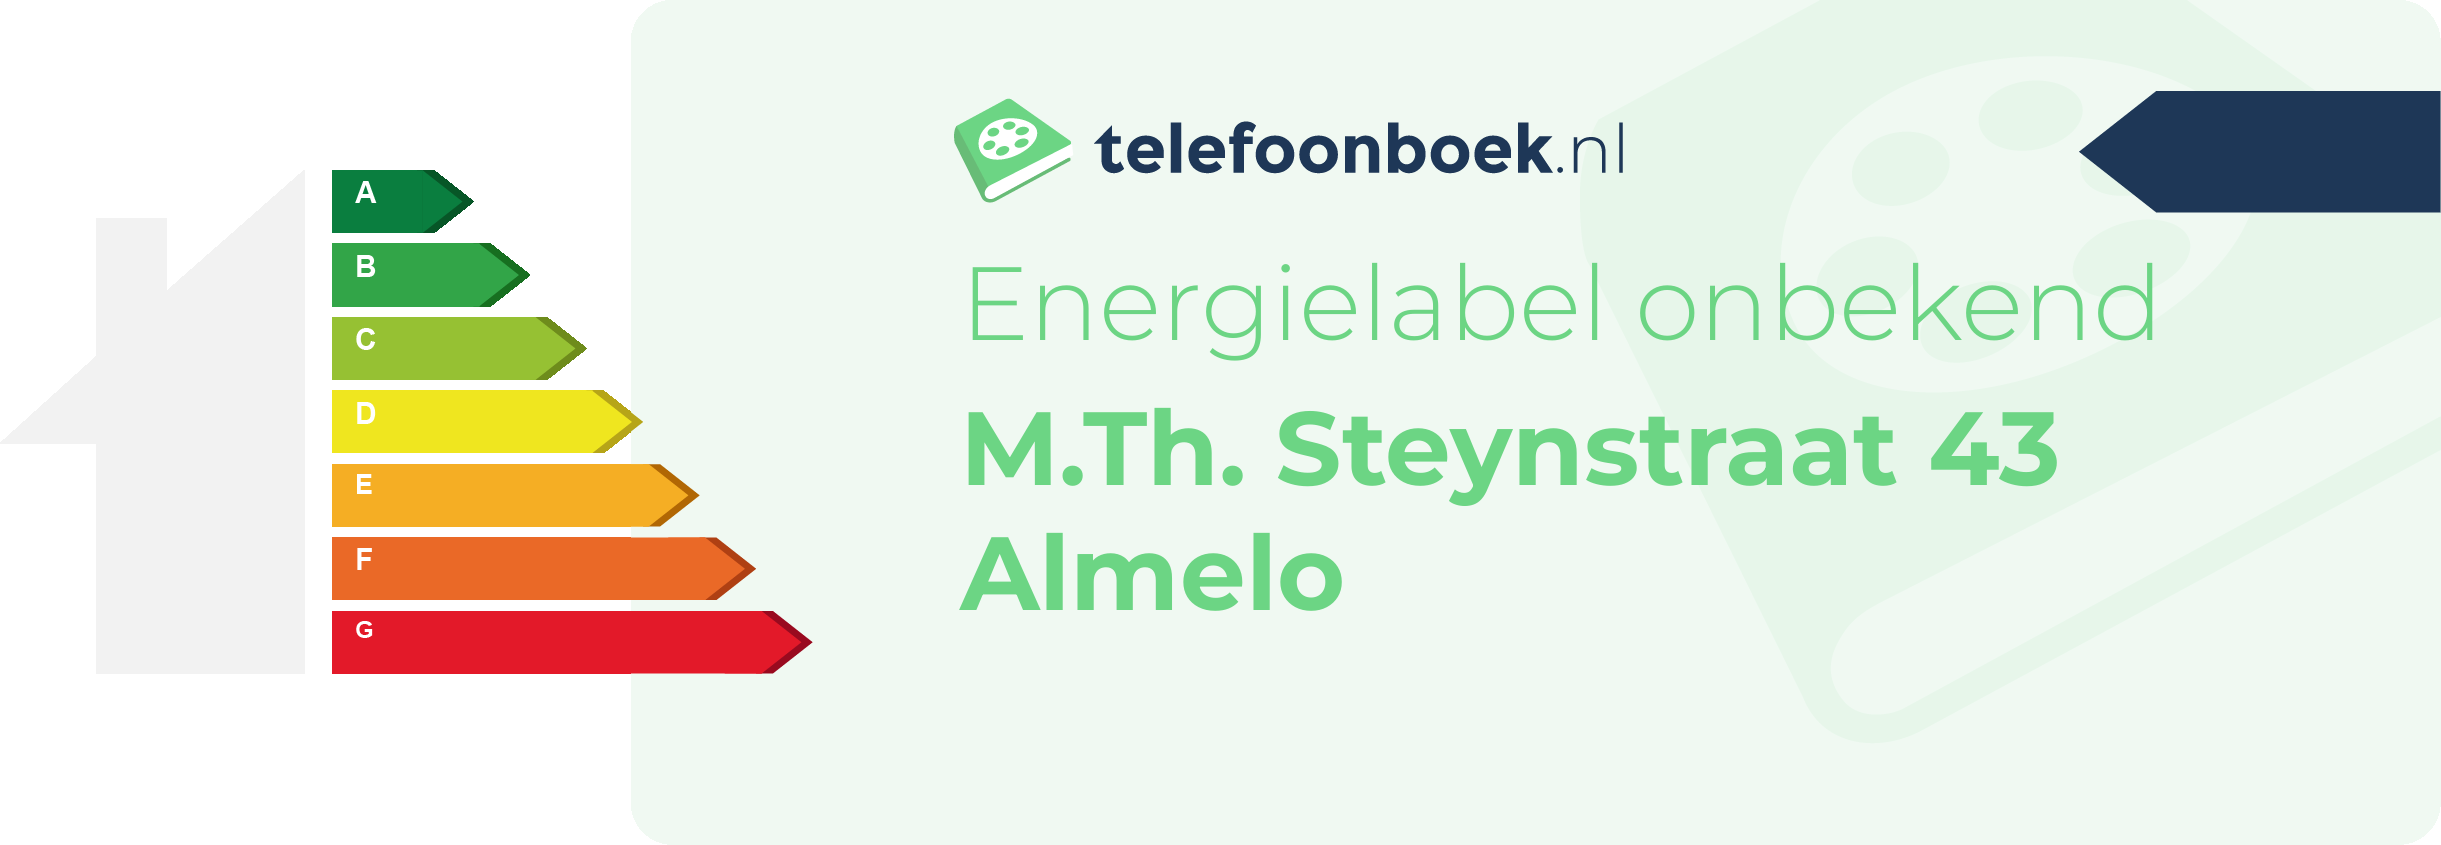 Energielabel M.Th. Steynstraat 43 Almelo